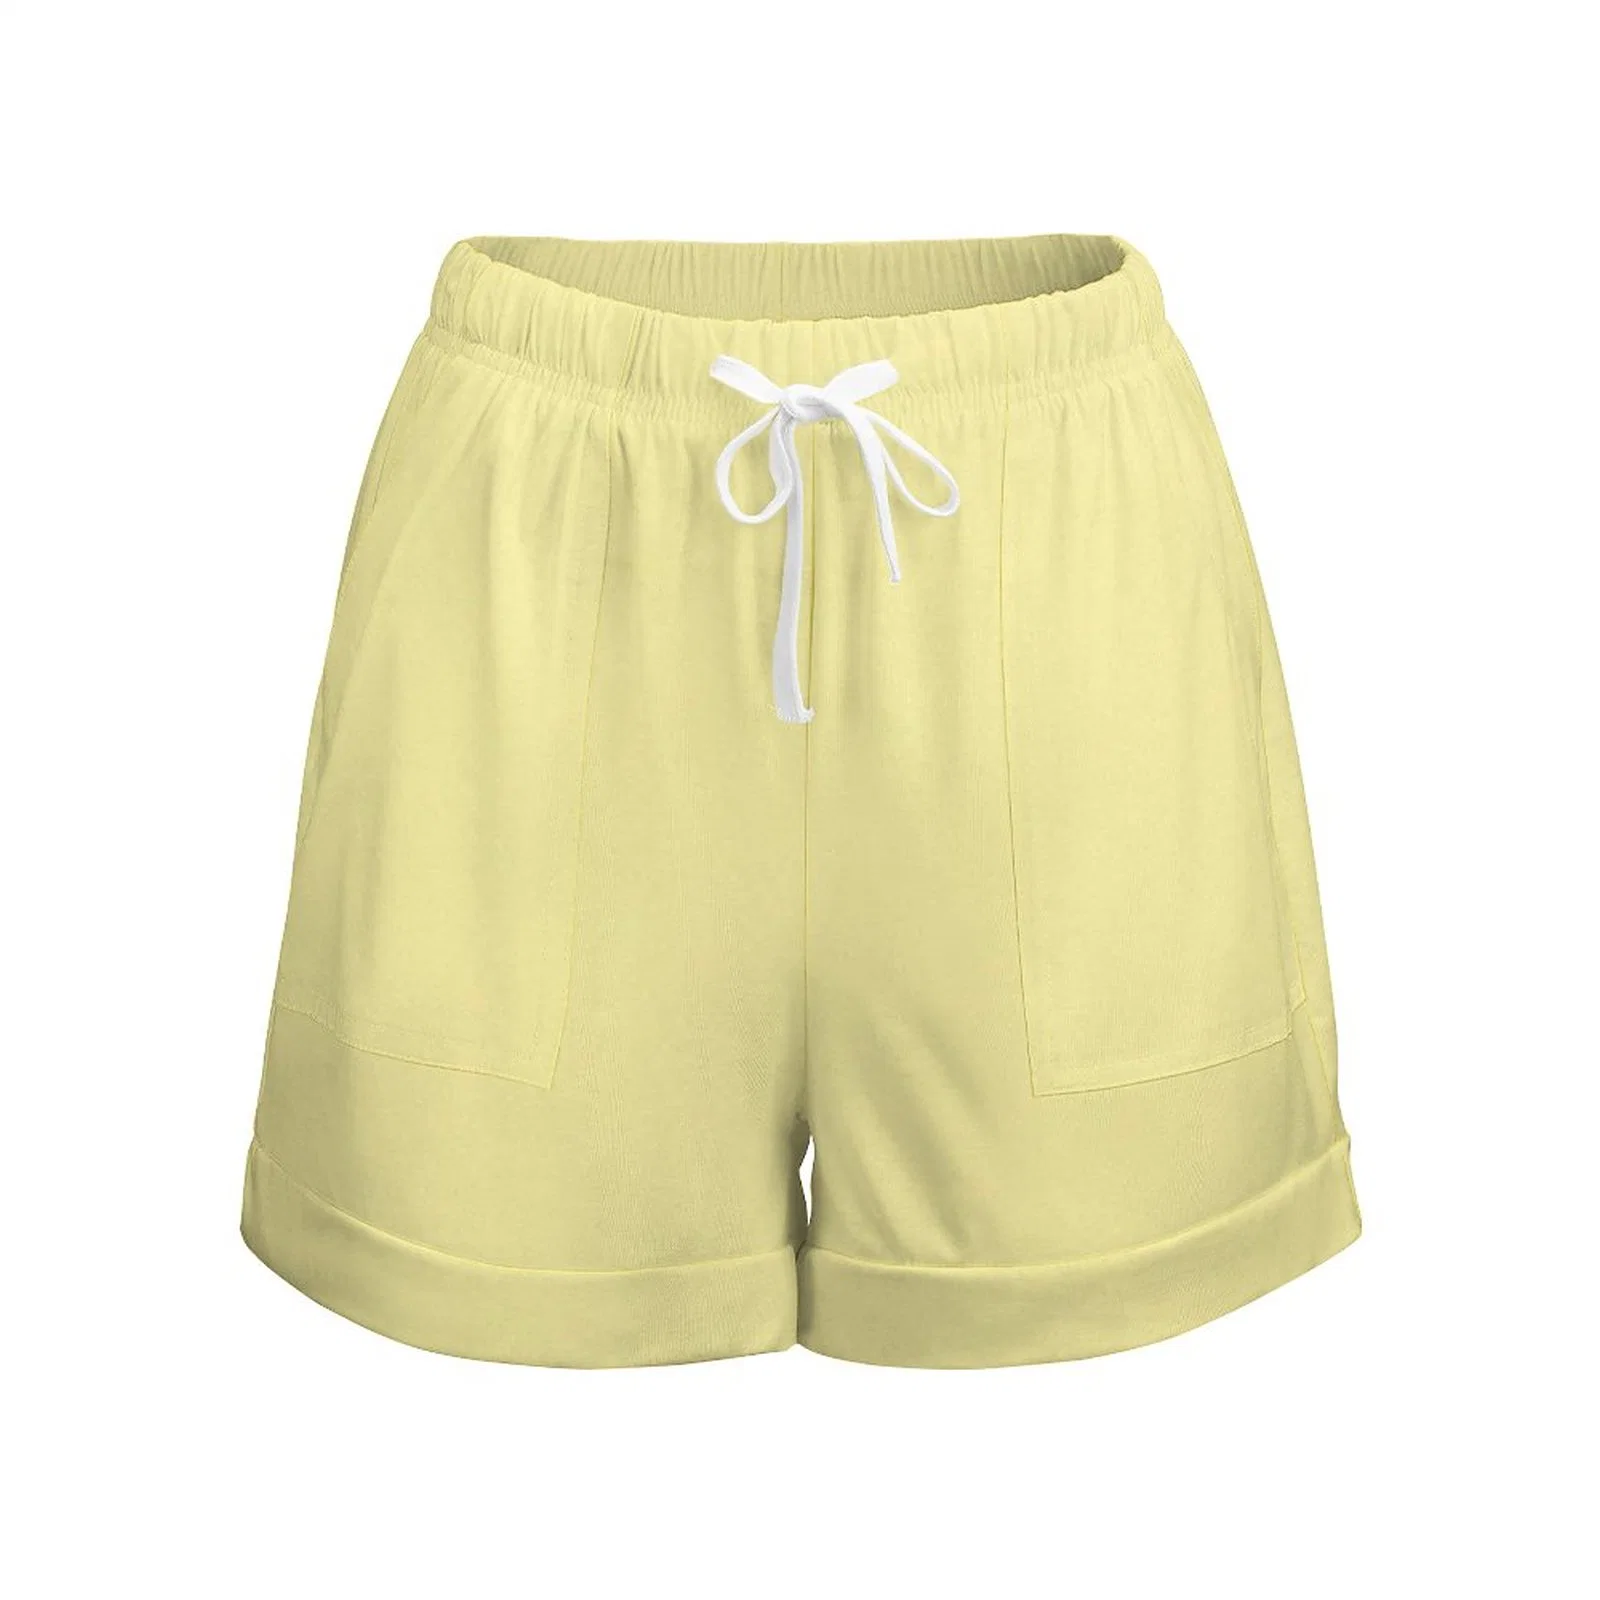 Sommer Mode Frauen Shorts Großhandel Benutzerdefinierte Drawstring Blank Shorts